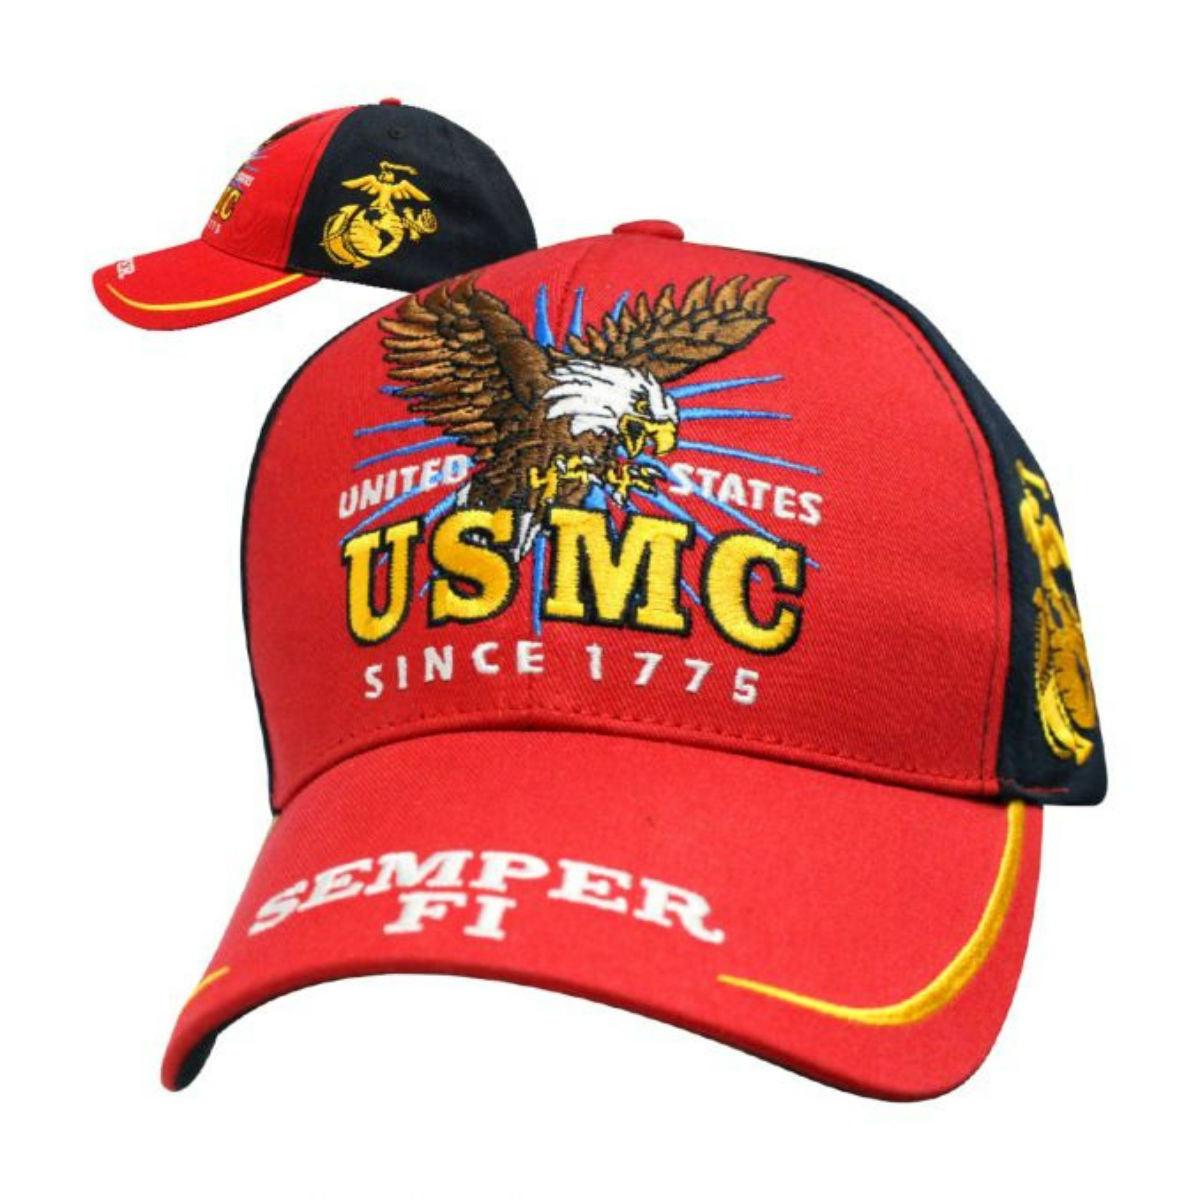 Daniel Smart Victory - Marines Hat, Unisex, Red/Black - American Legend Rider